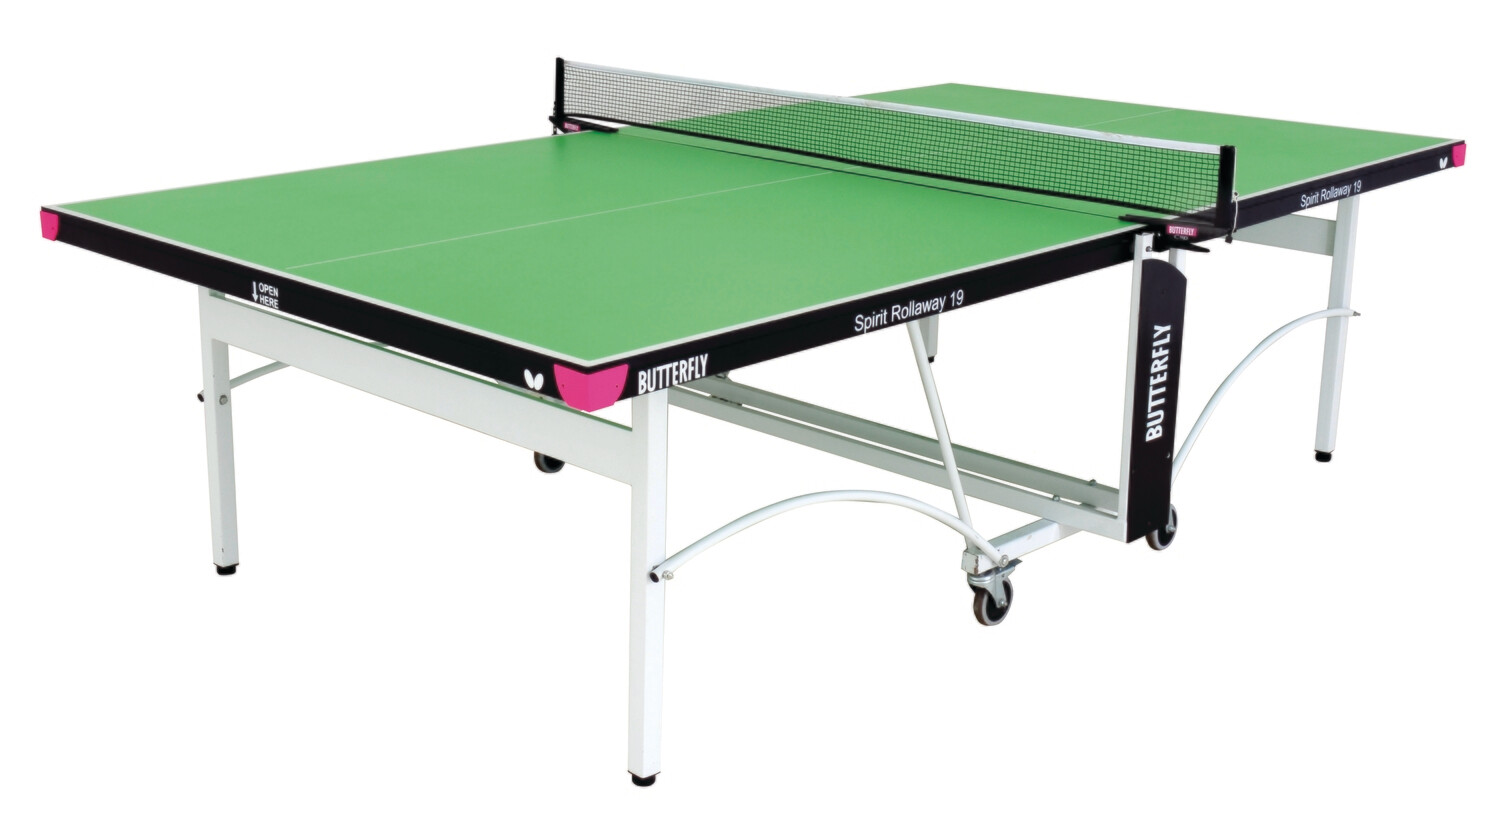 Butterfly Spirit 19 Indoor Rollaway Table Tennis Table